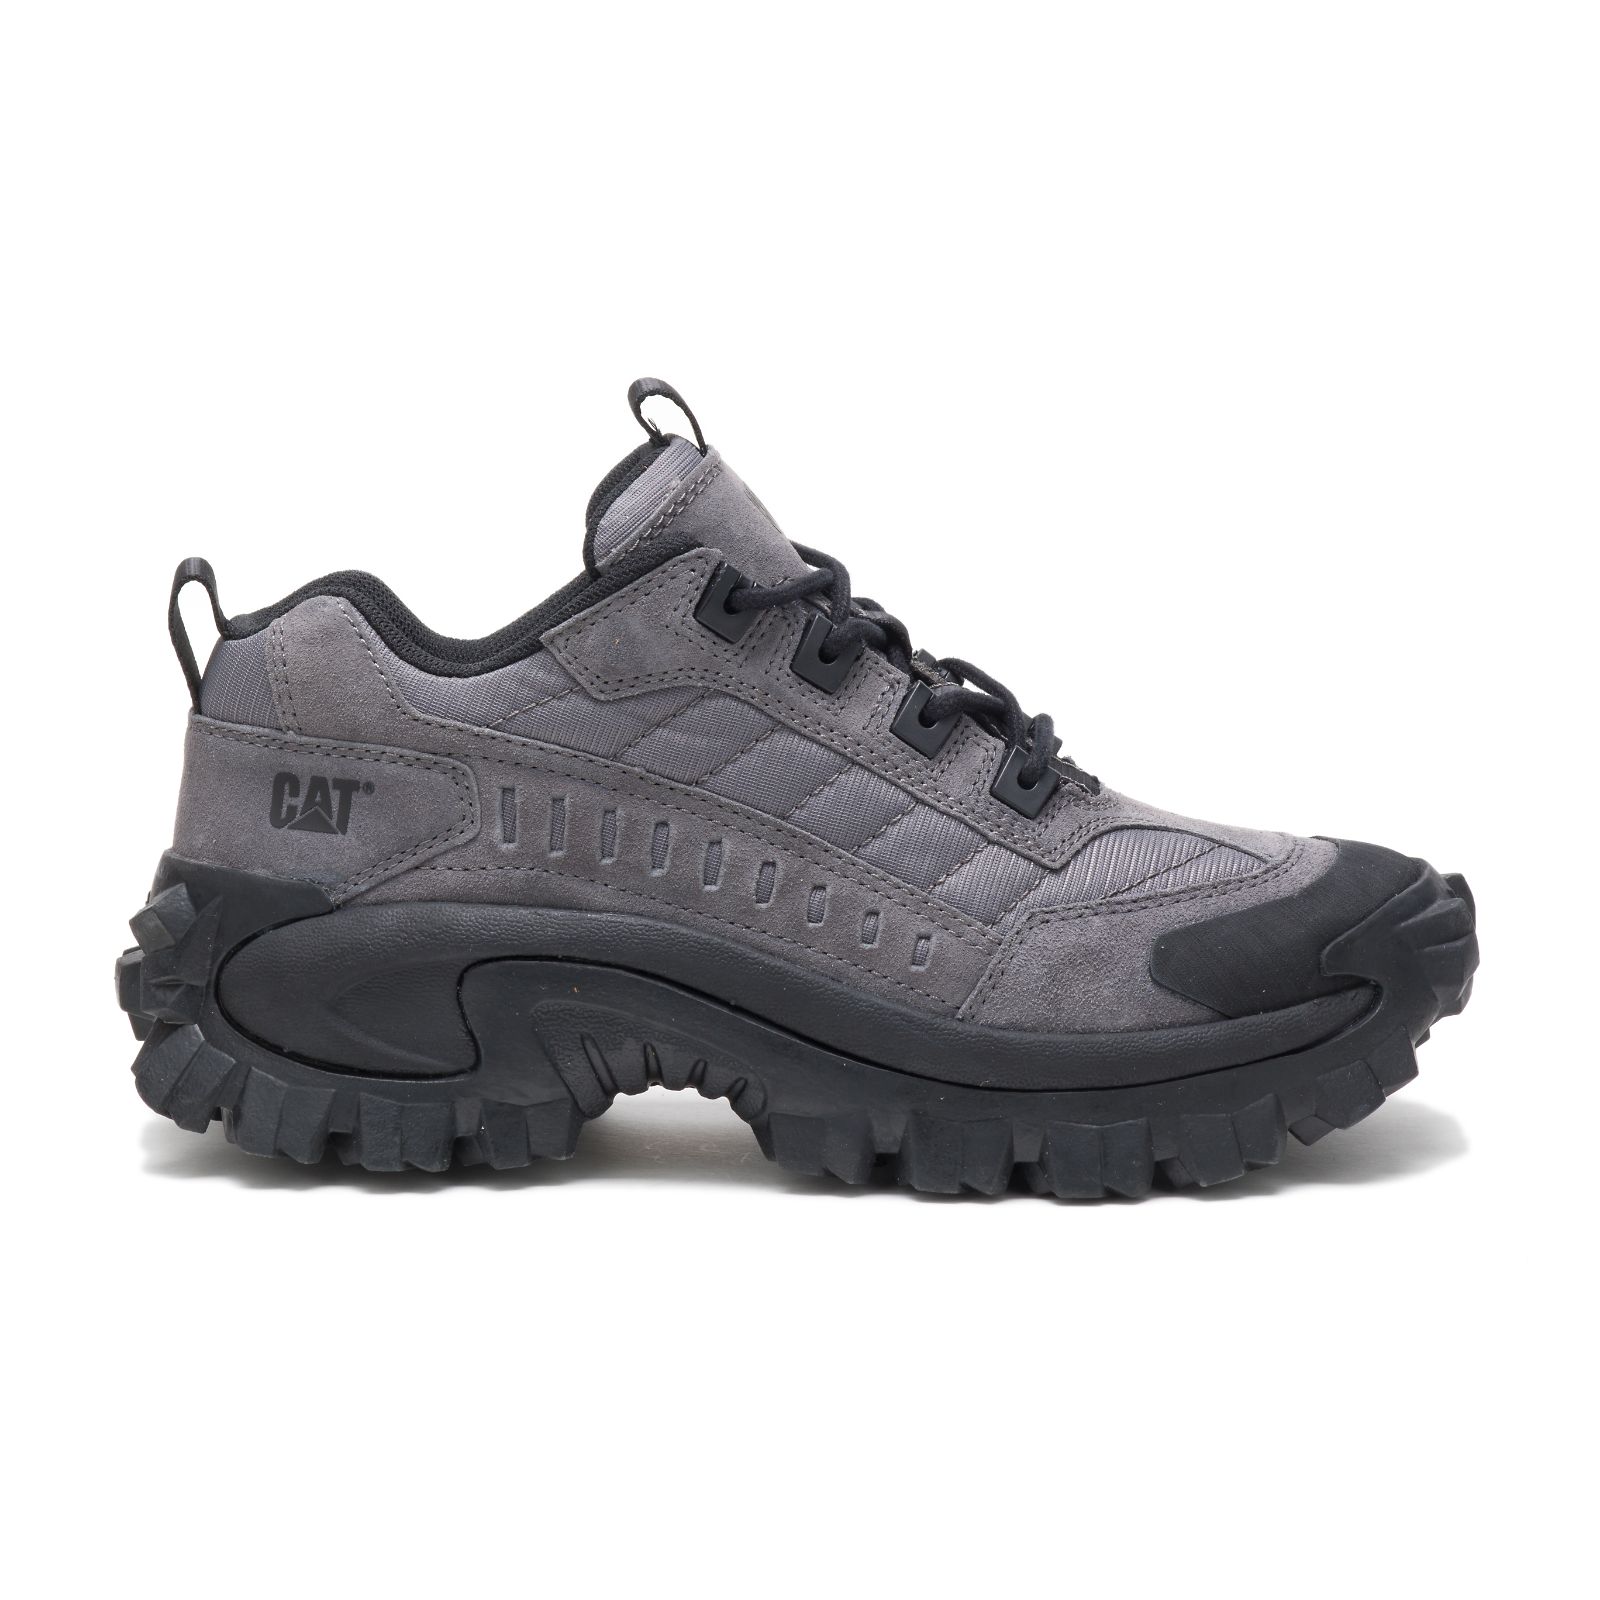 deep grey/Black Caterpillar Intruder Men's Casual Shoes | Cat-752948